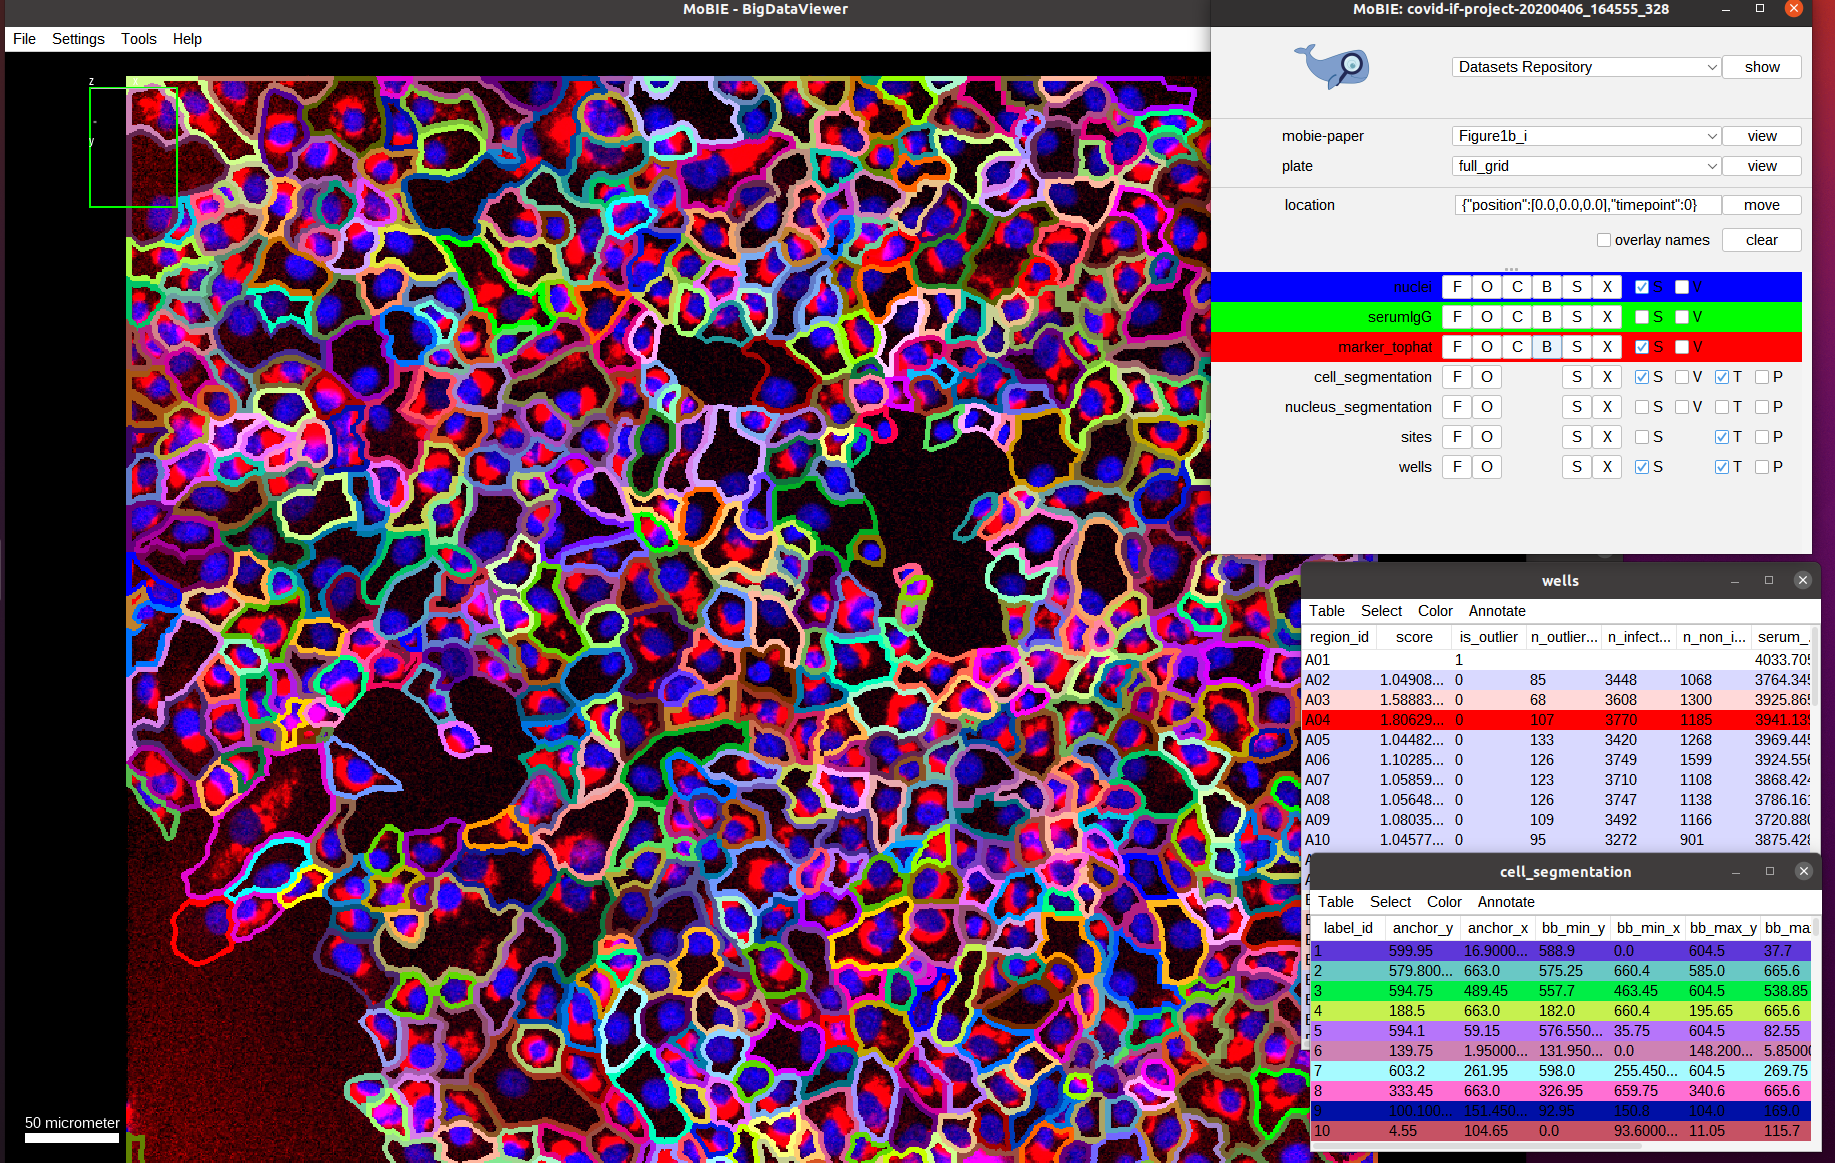 Cell segmentation overlay